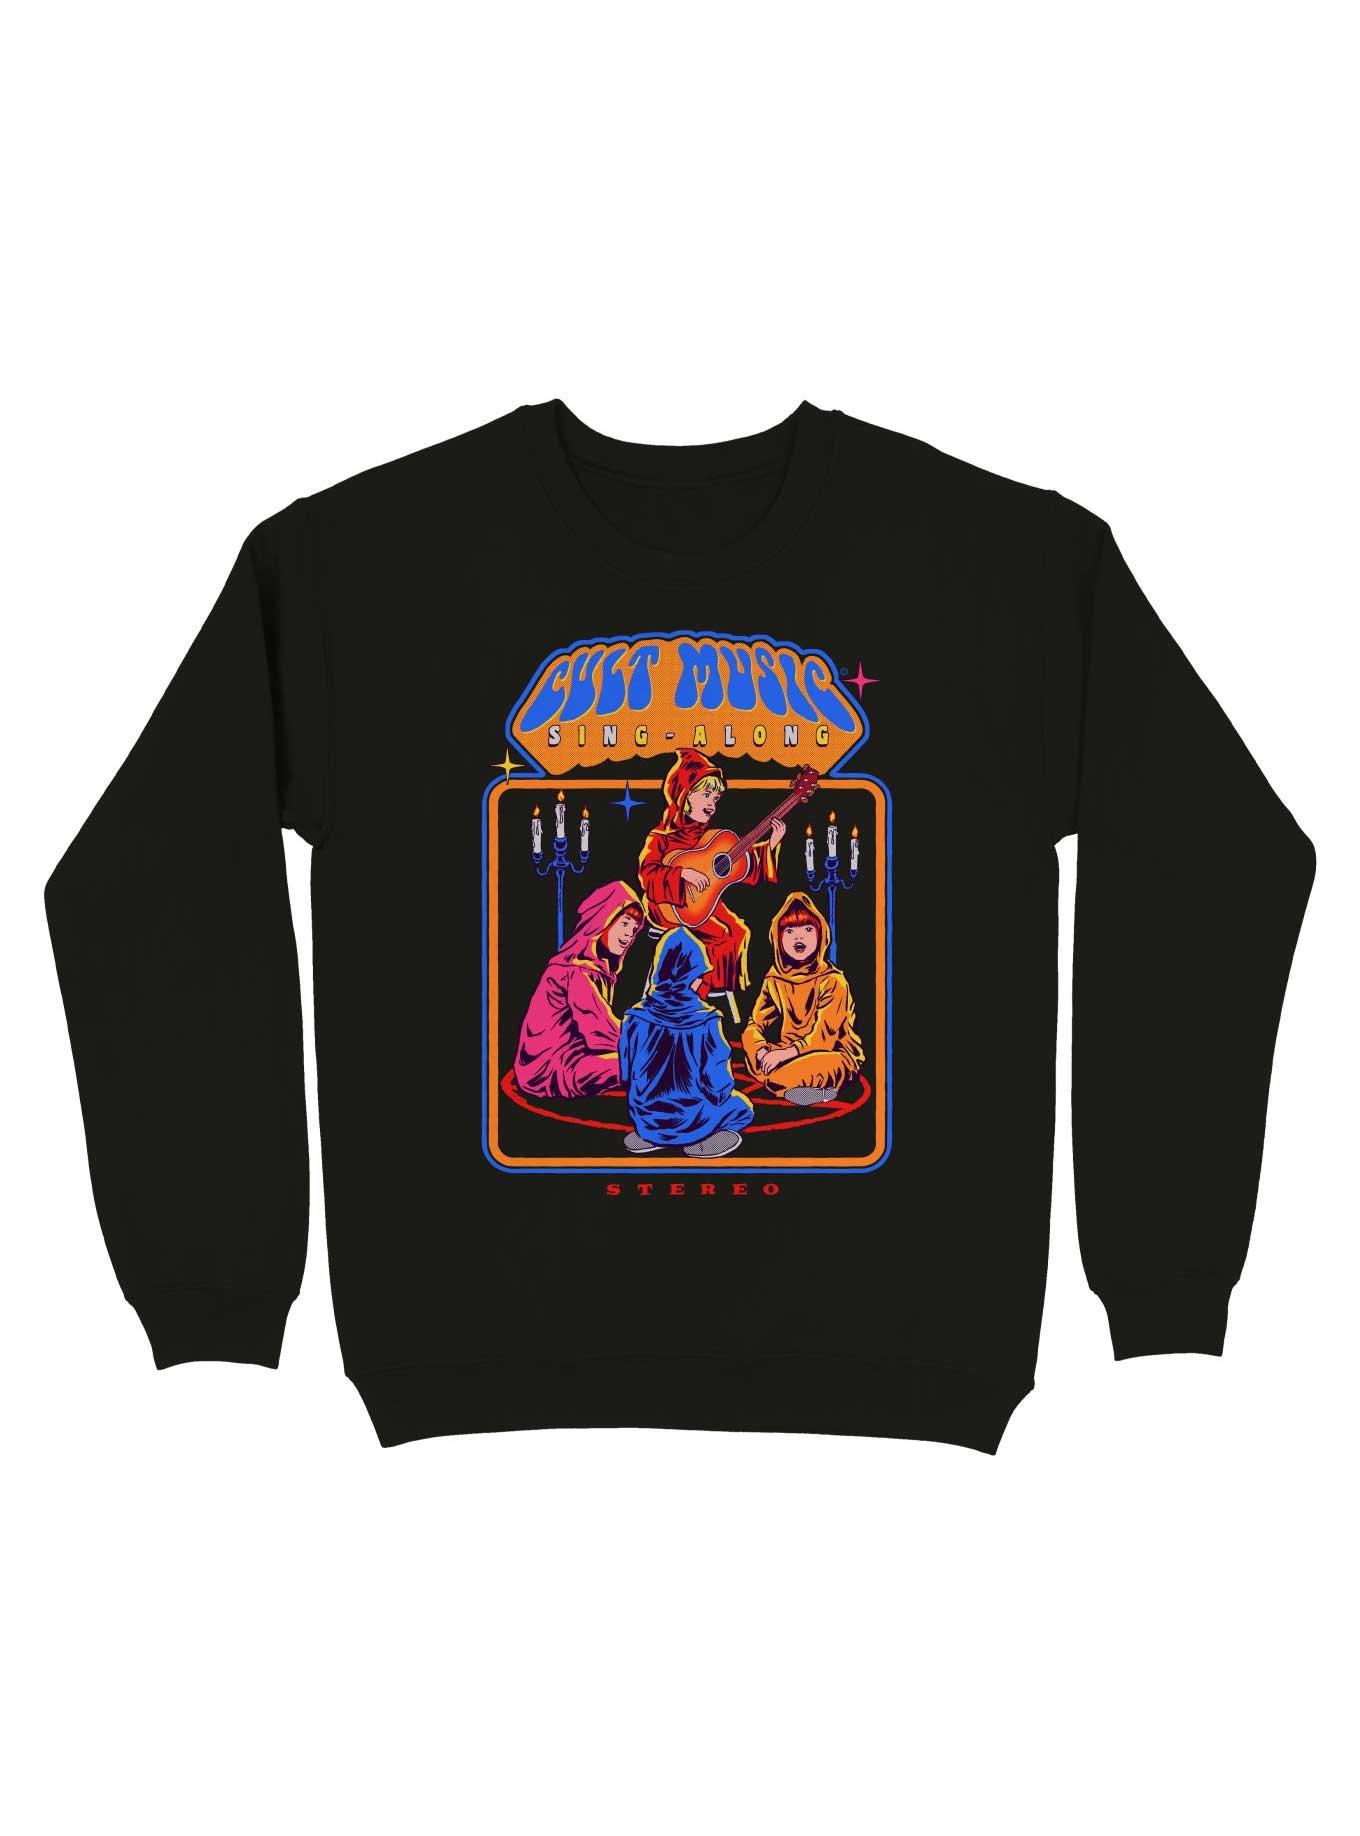 Cult Music Sing-Along Sweatshirt By Steven Rhodes